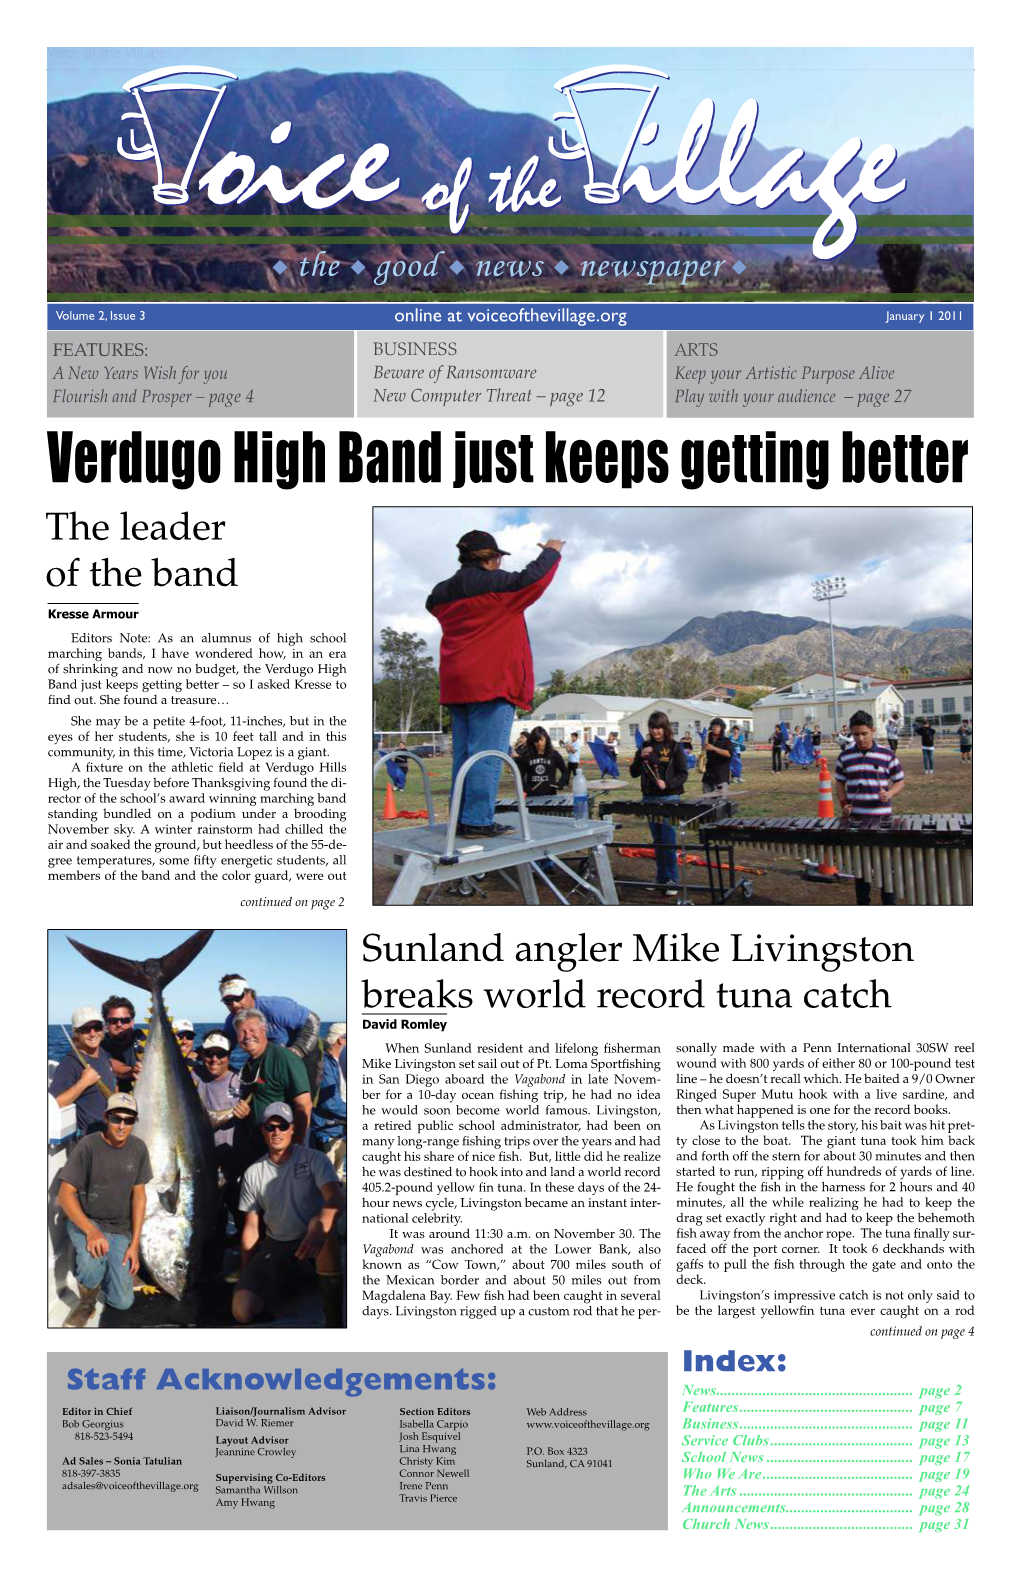 Verdugo High Band Just Keeps Getting Better